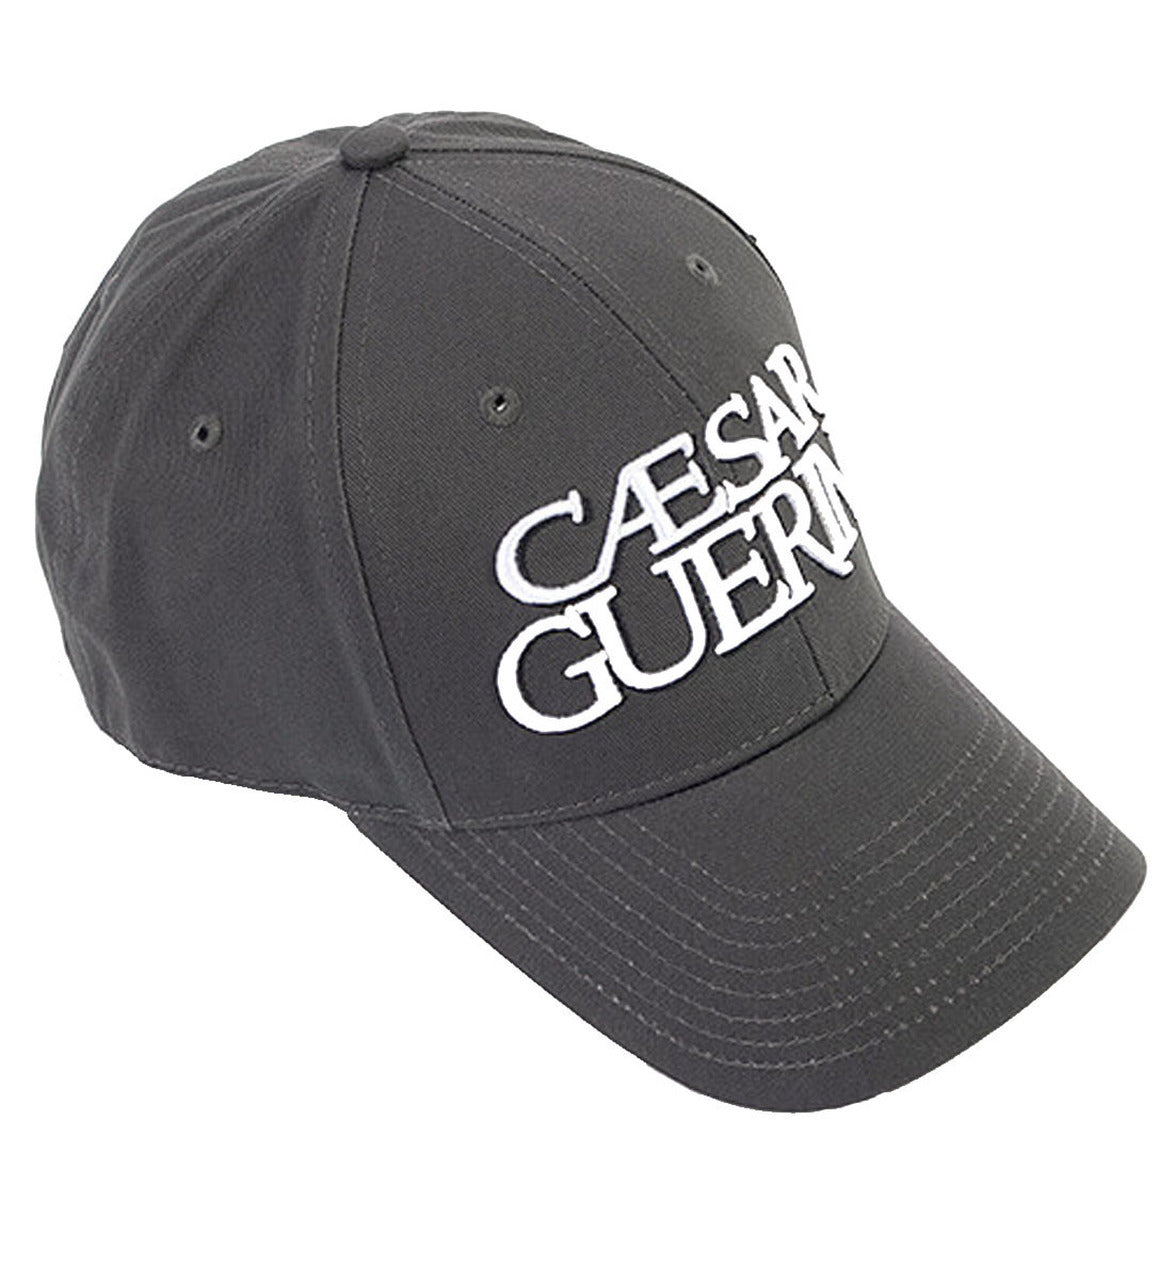 Caesar Guerini Hats